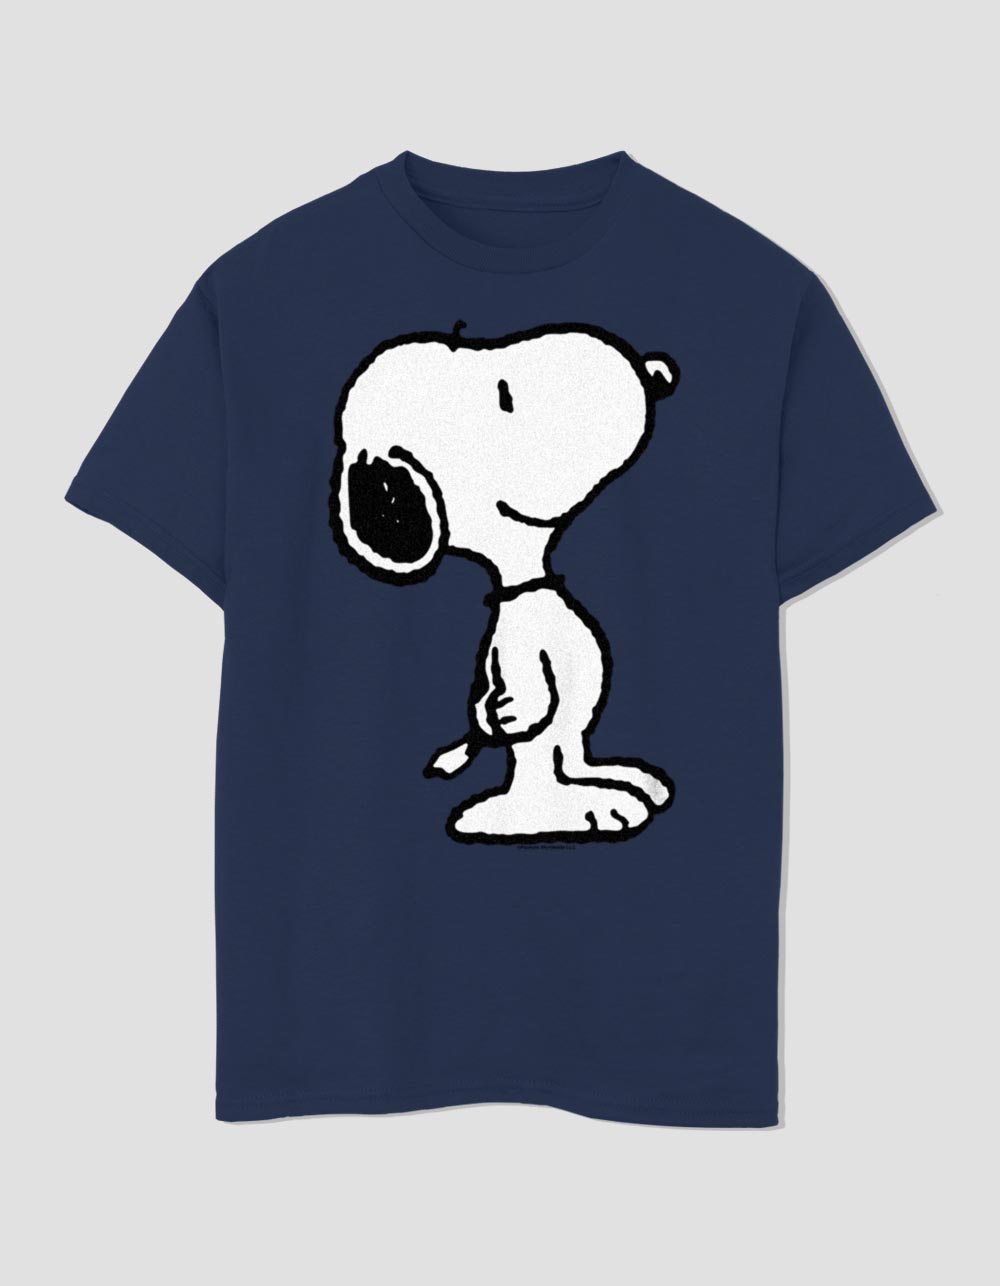 PEANUTS Snoopy Smile Unisex Kids Tee - NAVY | Tillys | T-Shirts